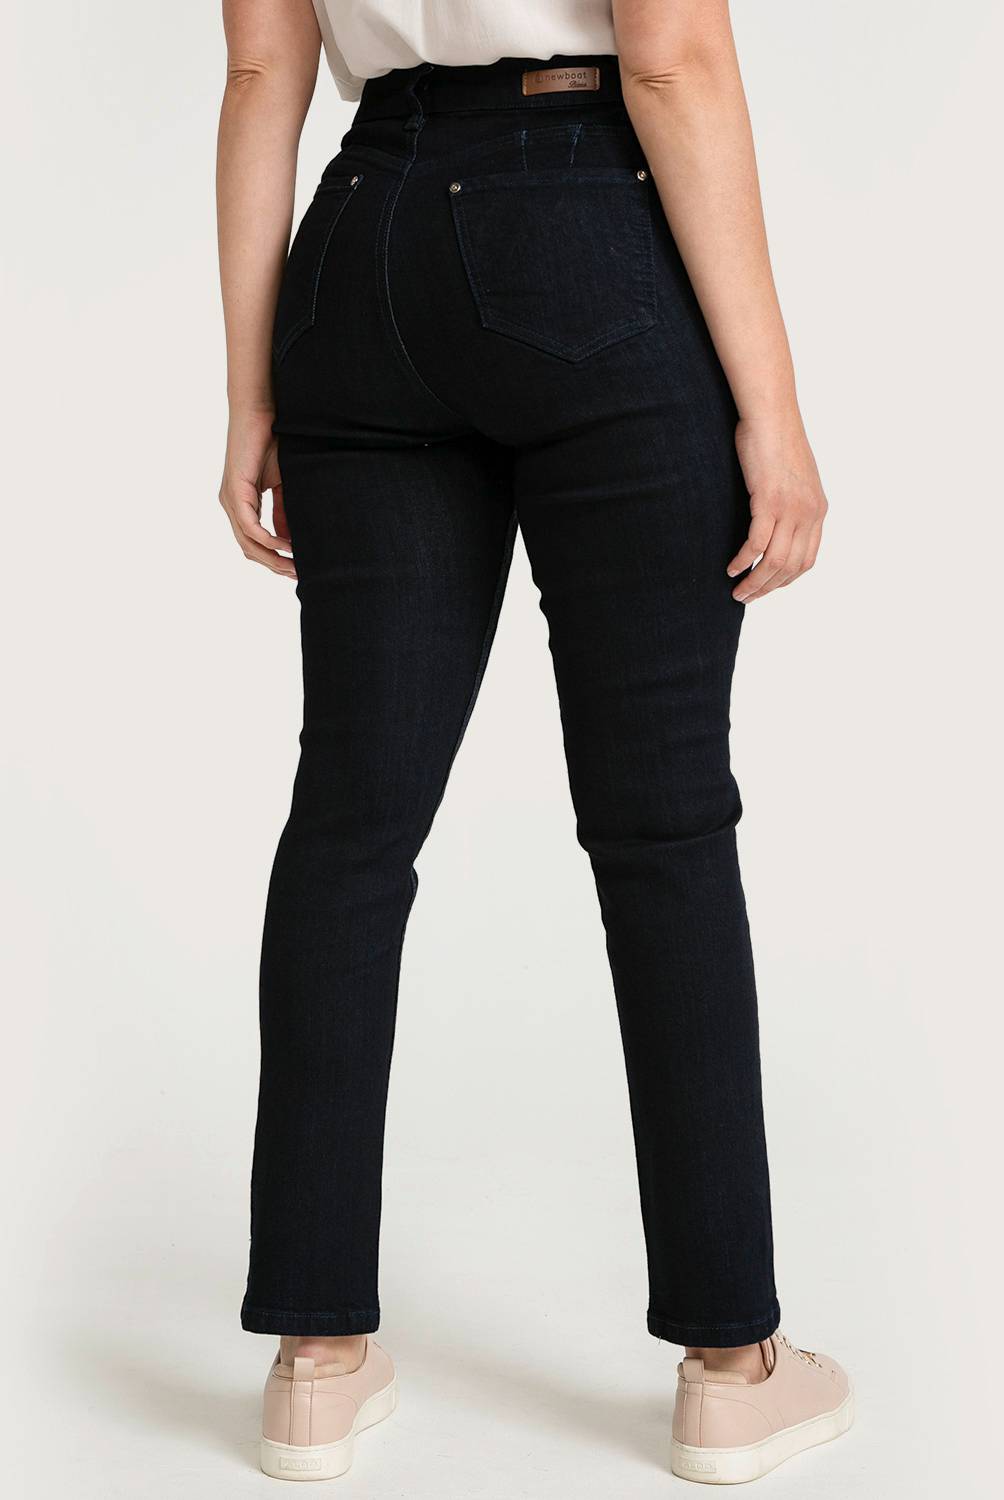 NEWPORT - Newport Jeans Skinny Tiro Alto Mujer